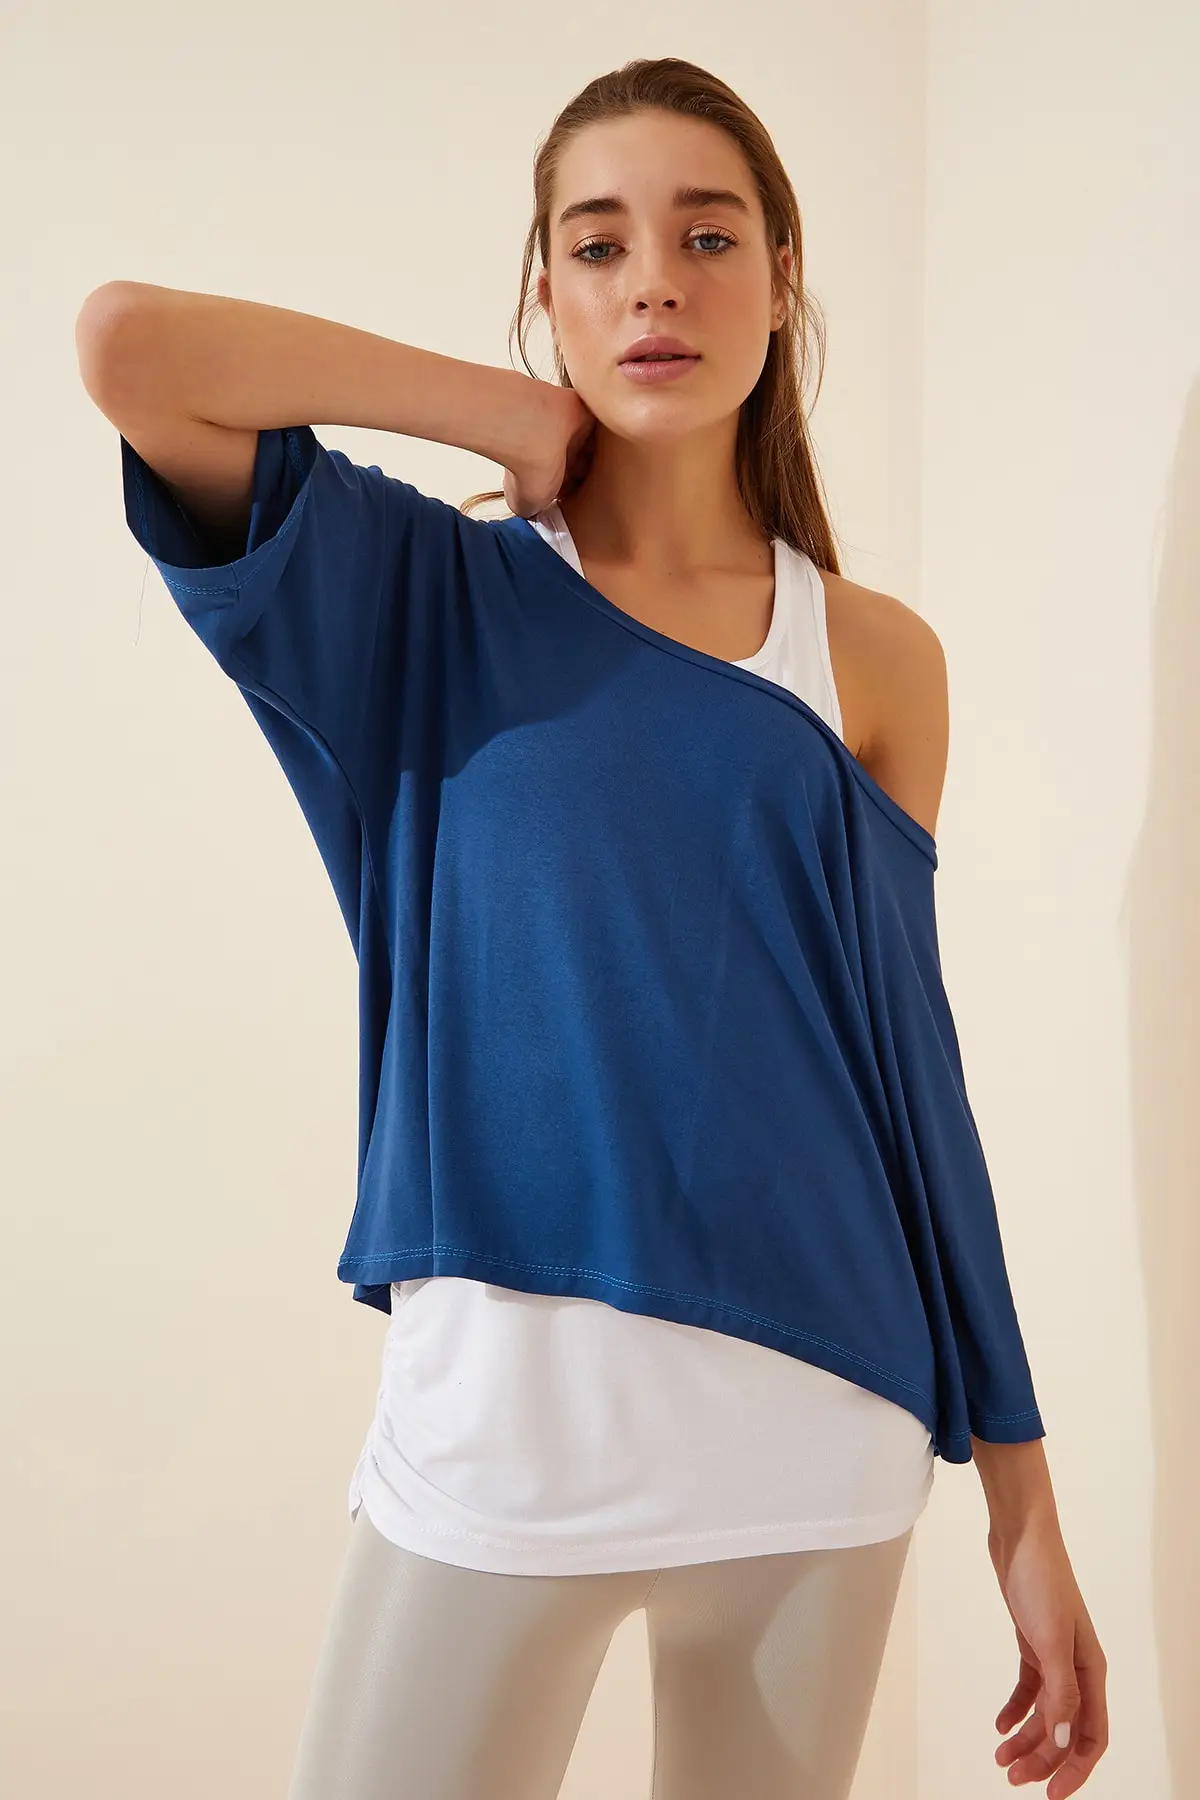 Women's Indigo Blue Undershirt Loose Binary Thirt 2021 Spring Summer Fashion